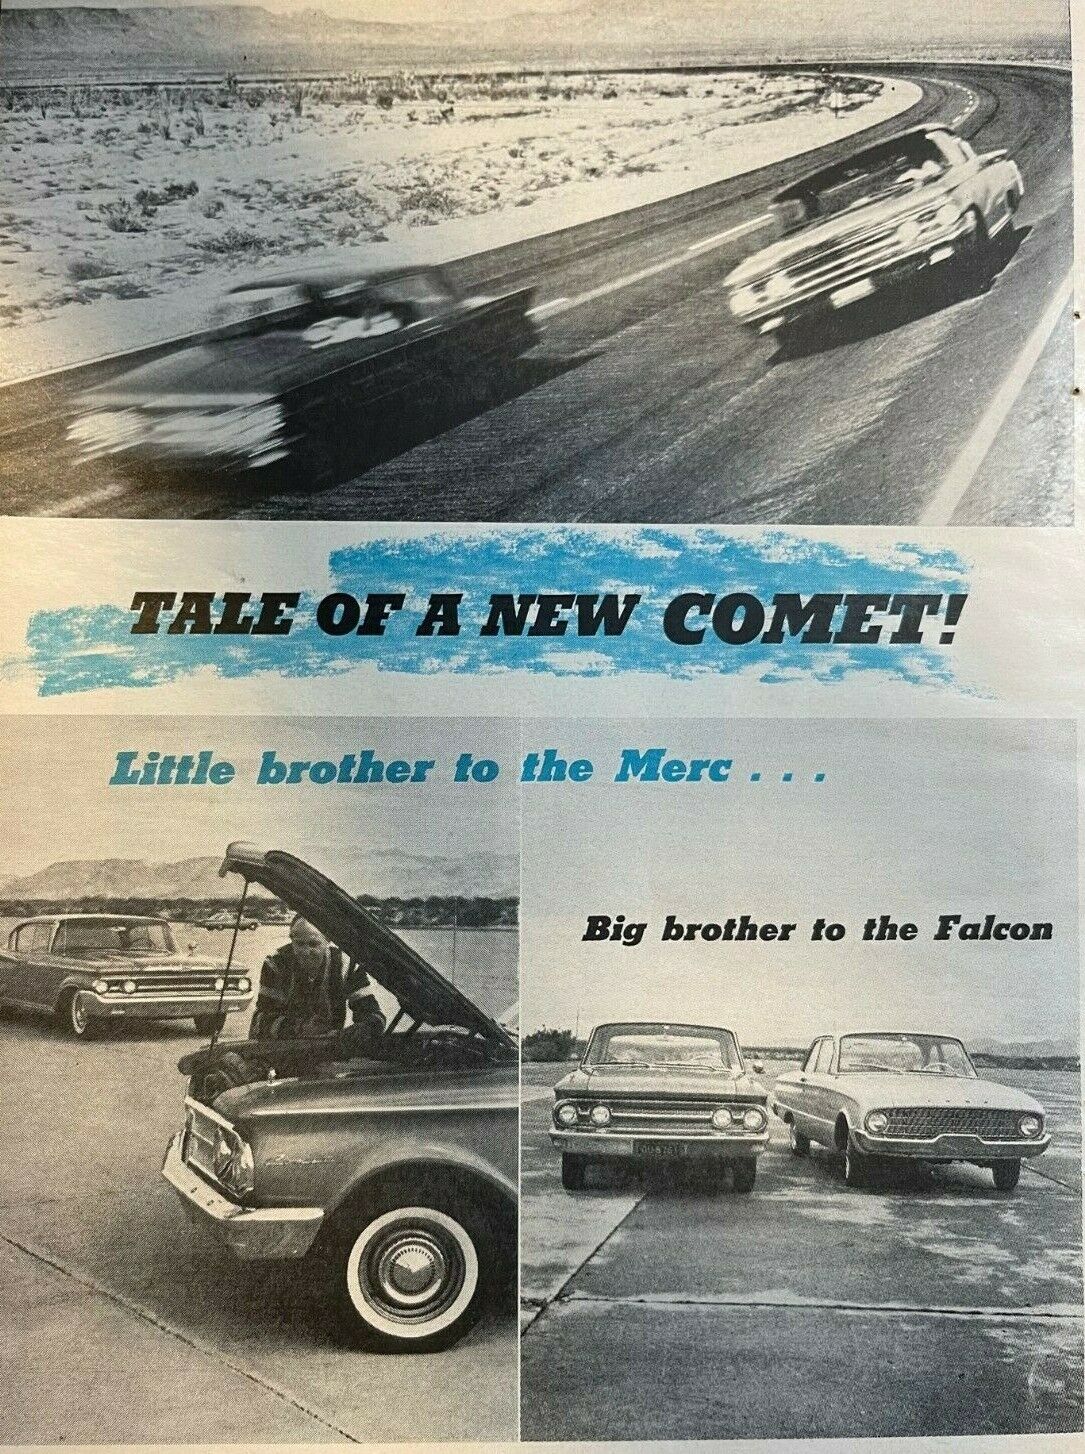 1960 Road Test Mercury Comet illustrated